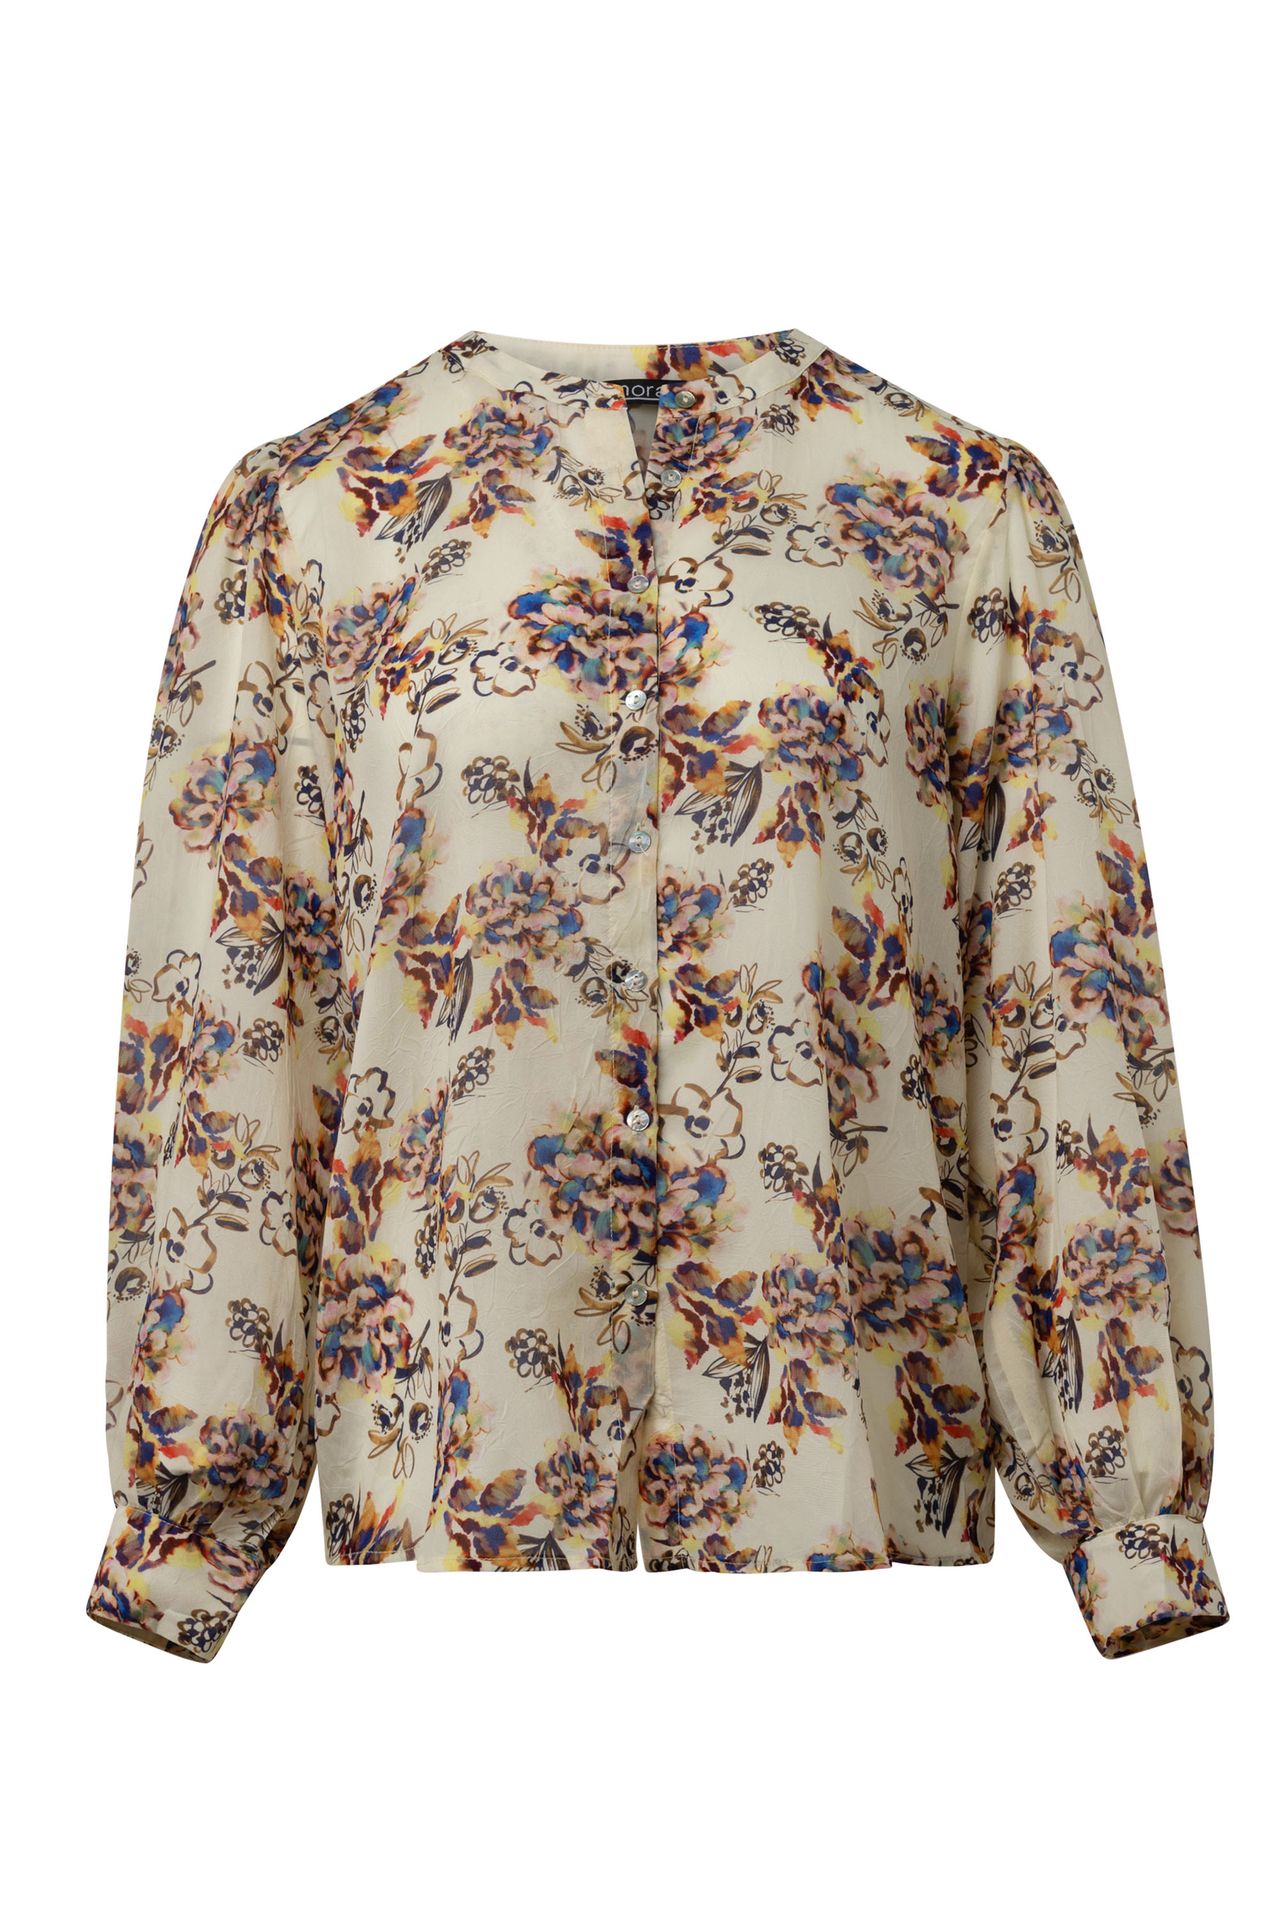 Norah Meerkleurige blouse vanilla multicolor 214857-108